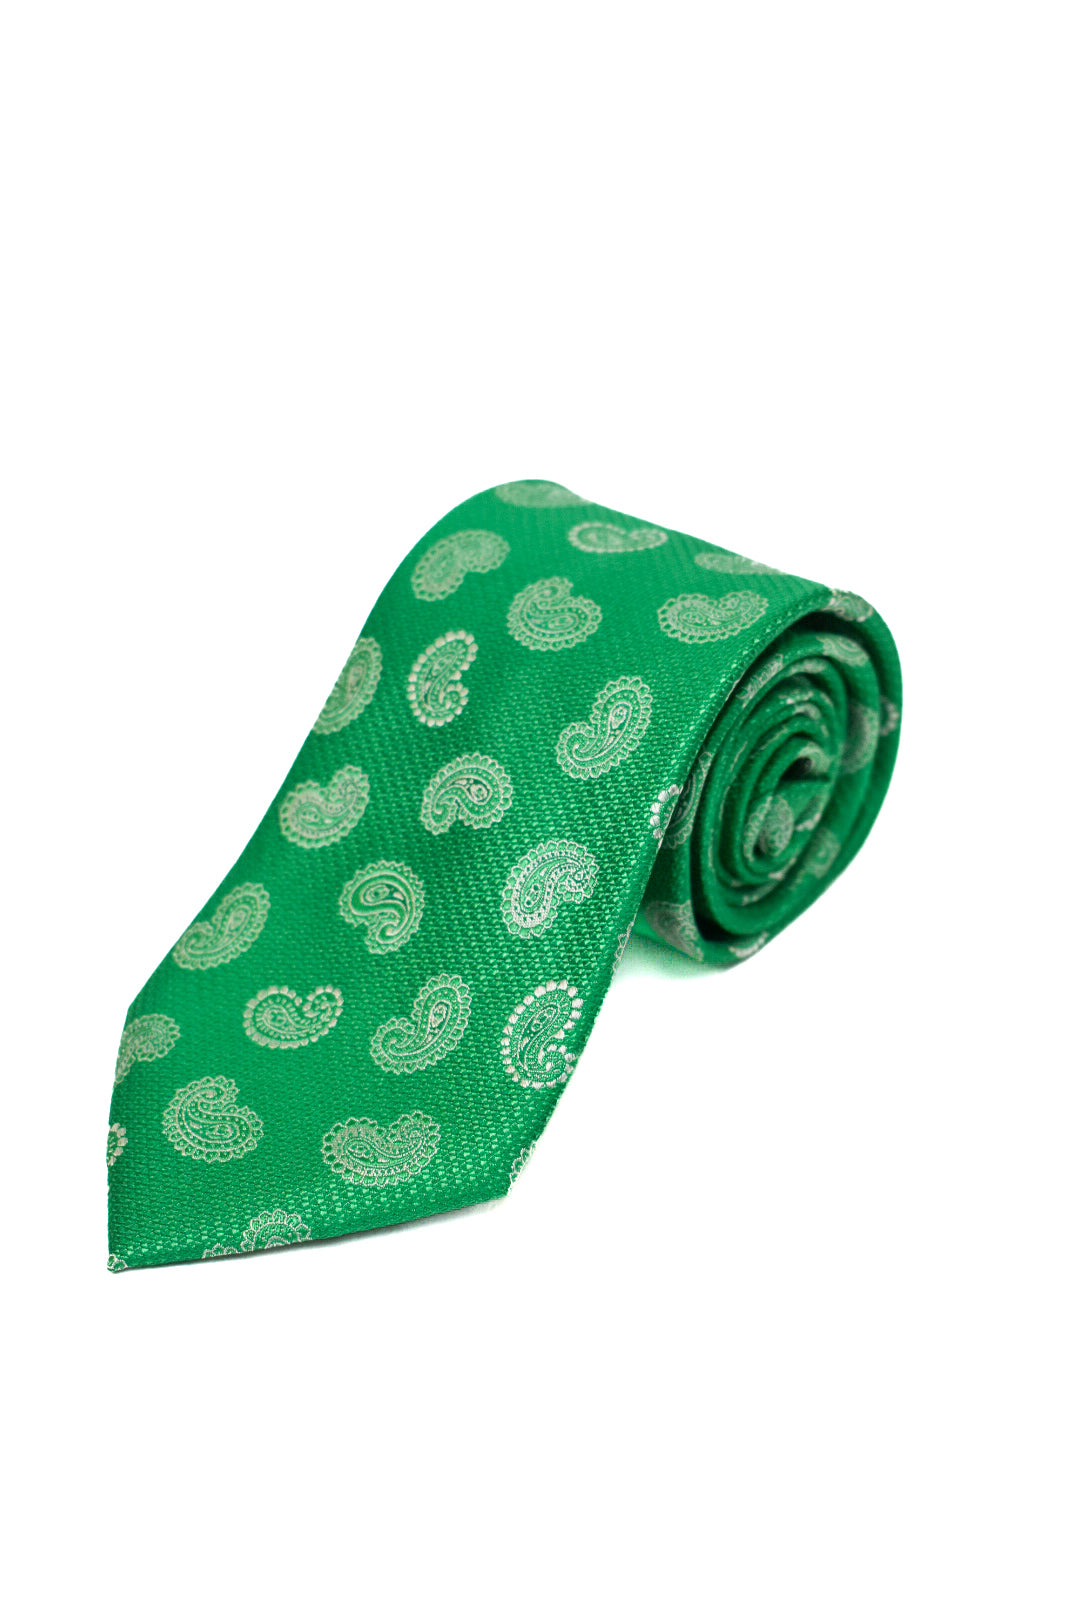 Forsyth Emerald Green Paisley Tie